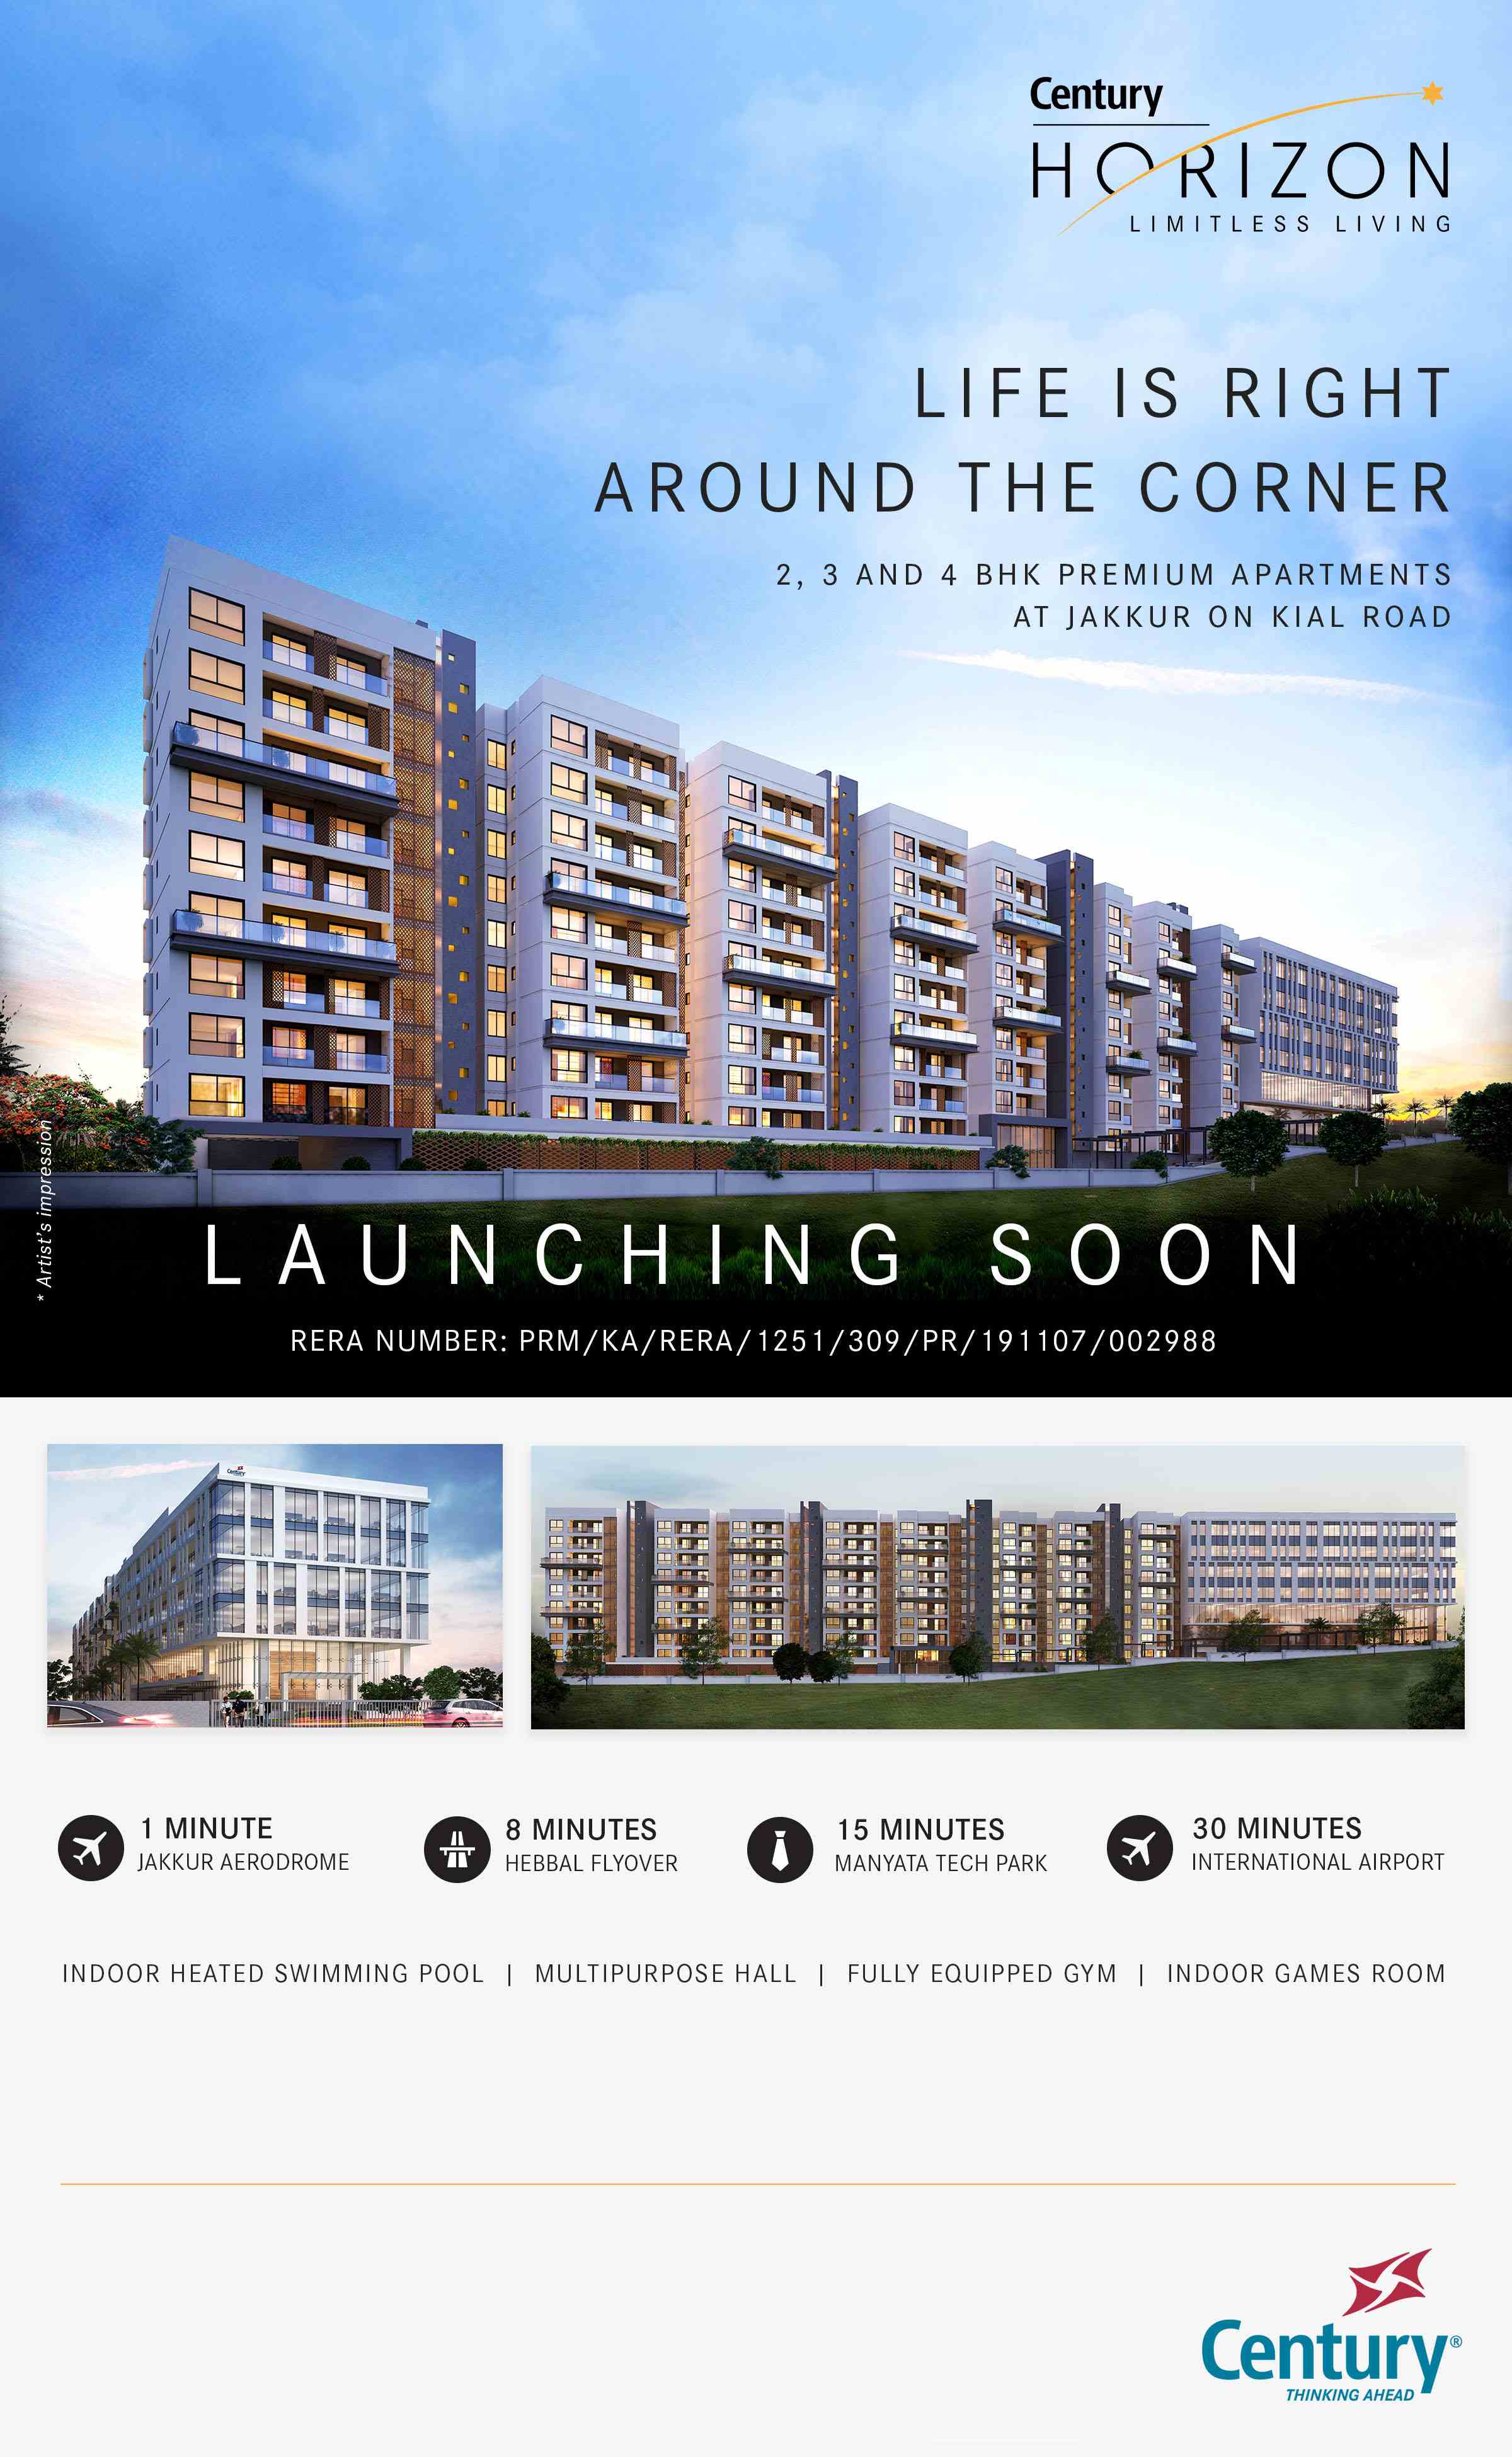 Launching soon 2, 3 and 4 BHK premium apartments at Century Horizon, Bangalore